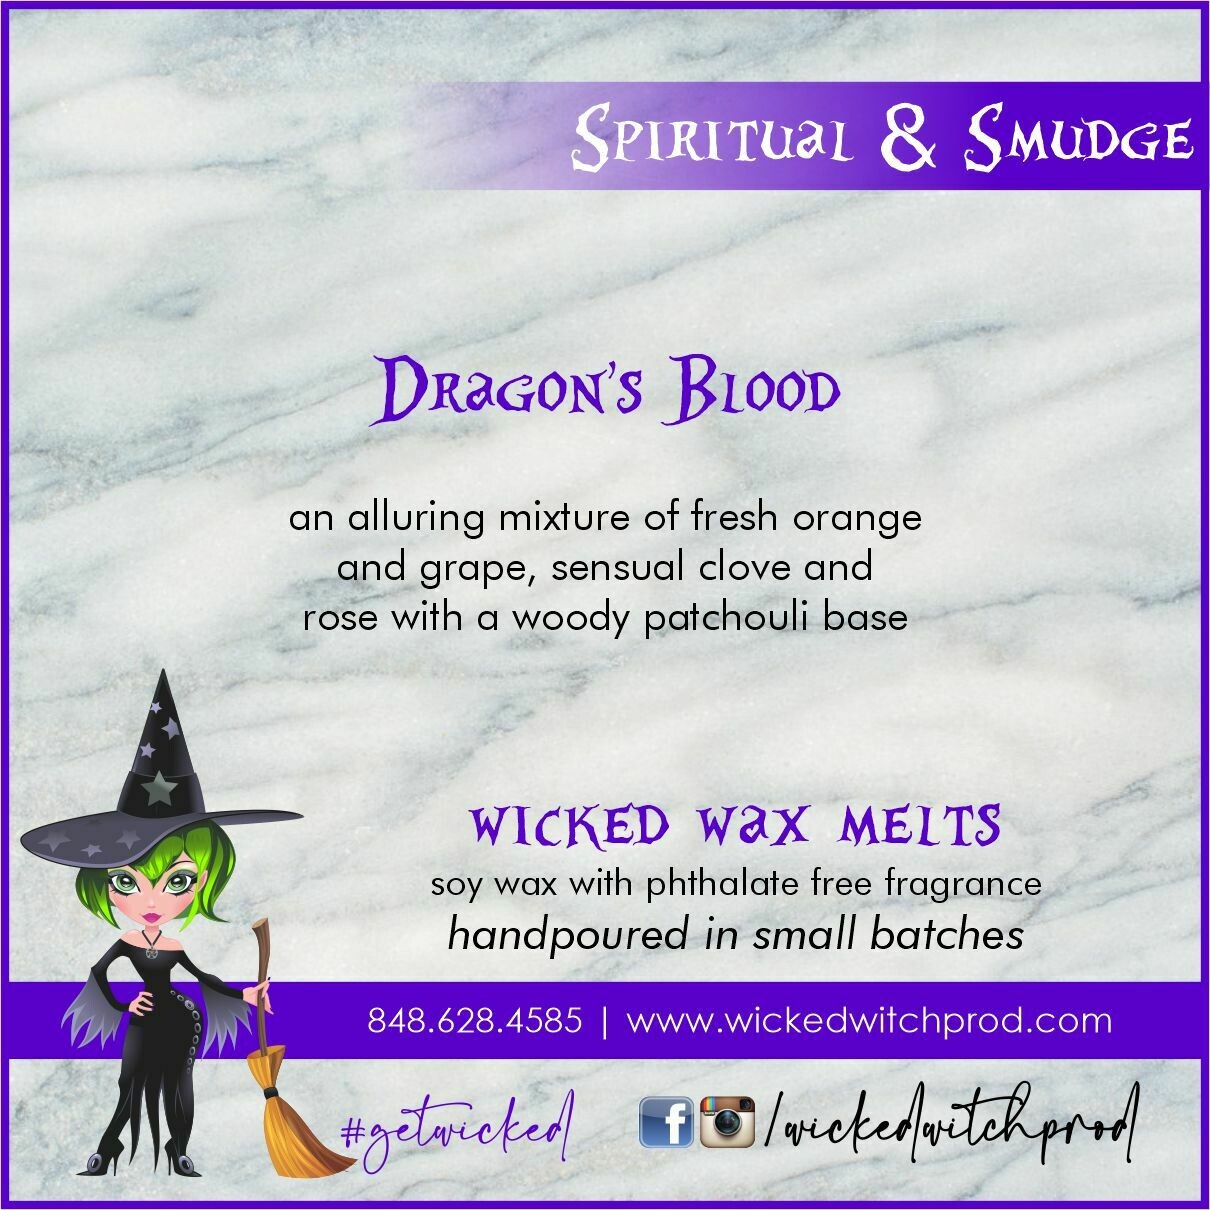 Dragon's Blood Wicked Wax Melts